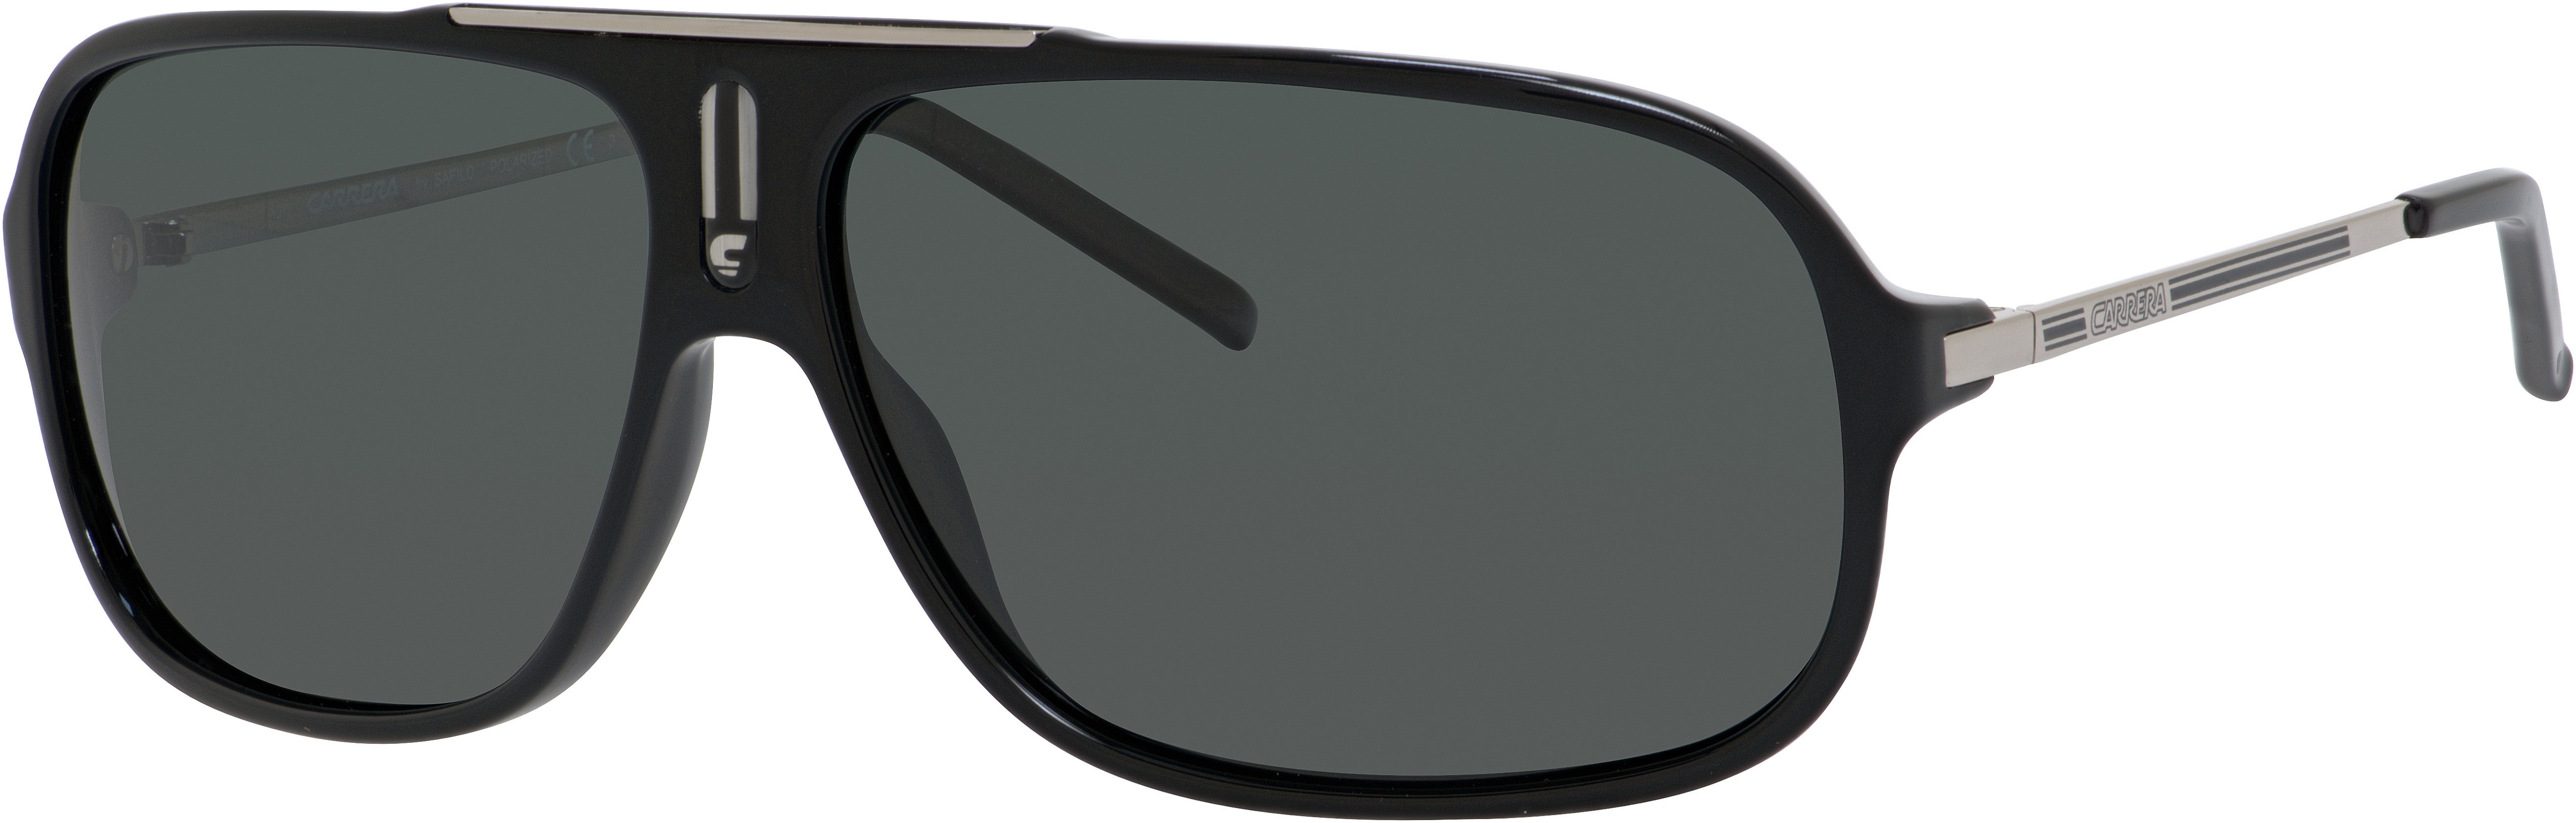 Carrera Cool Aviator Sunglasses 0CSA-0CSA  Black / Palladium (RA Gray Polarized)